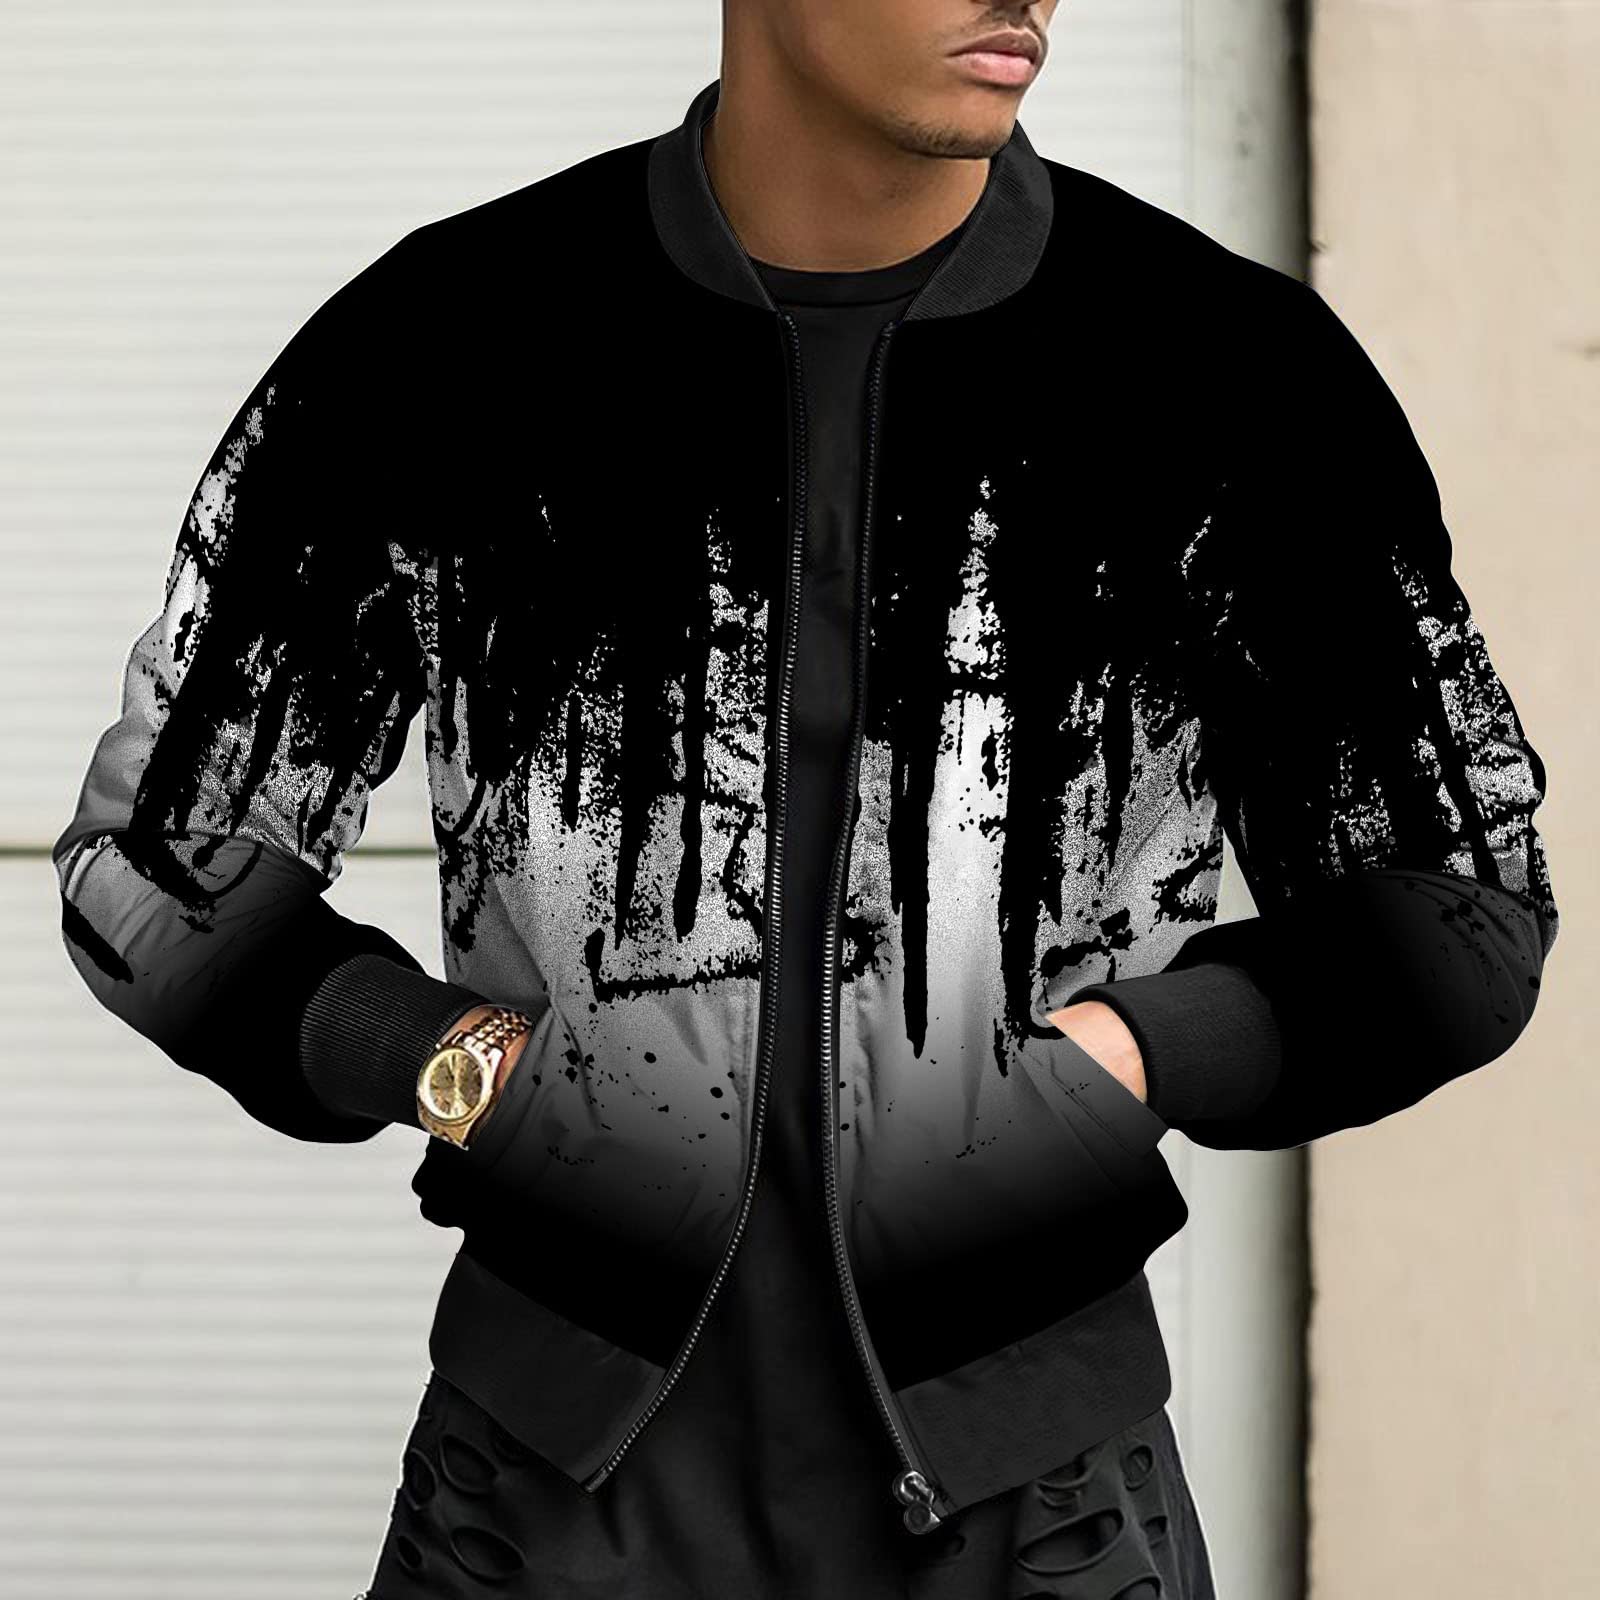 XIAXOGOOL Bomber Jacket Men Fashion Novelty 3D Printed Graphic Jackets For Men Cropped Coat Zipper Varsity Baseball Jacket